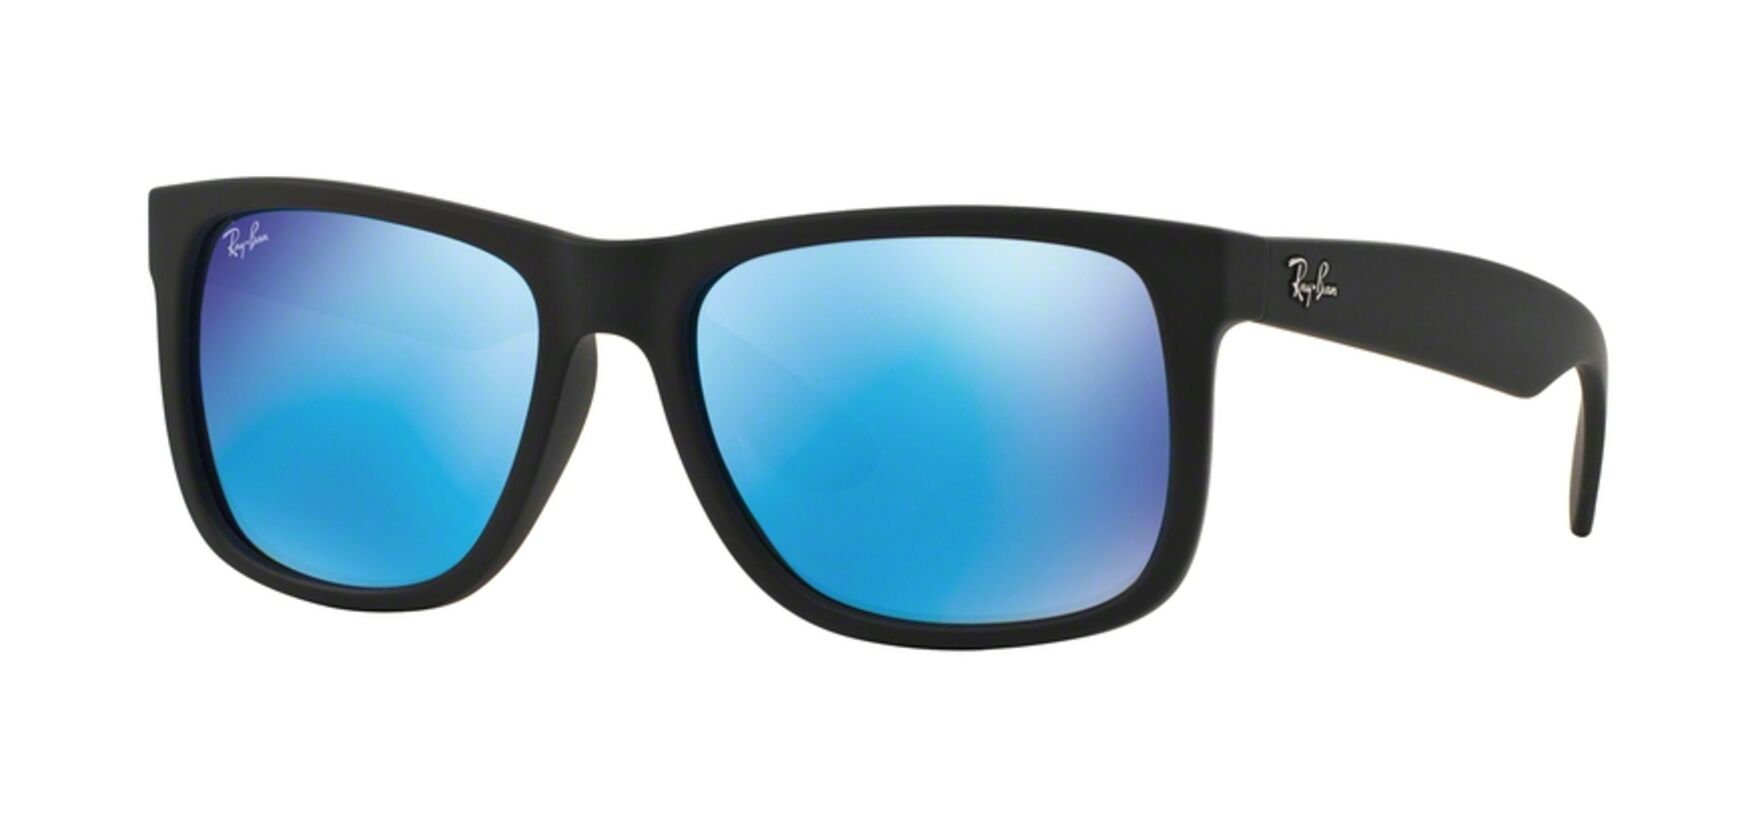 Ray Ban Sunglasses RB4165 622 55 55 - The Optic Shop